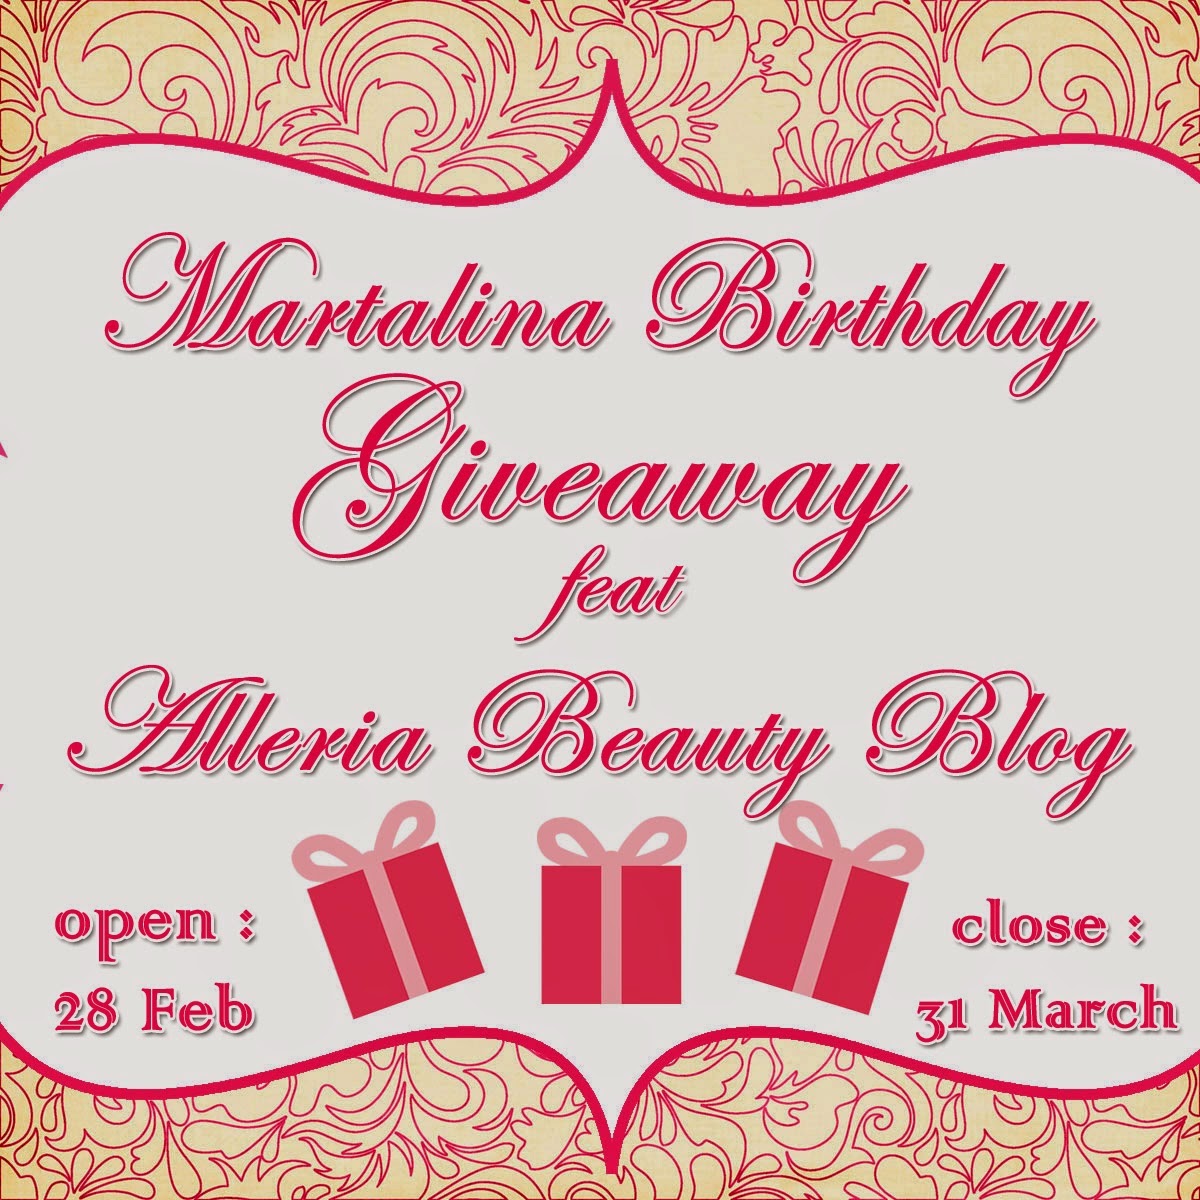 Martalina Birthday Giveaway feat. Alleria Beauty Blog